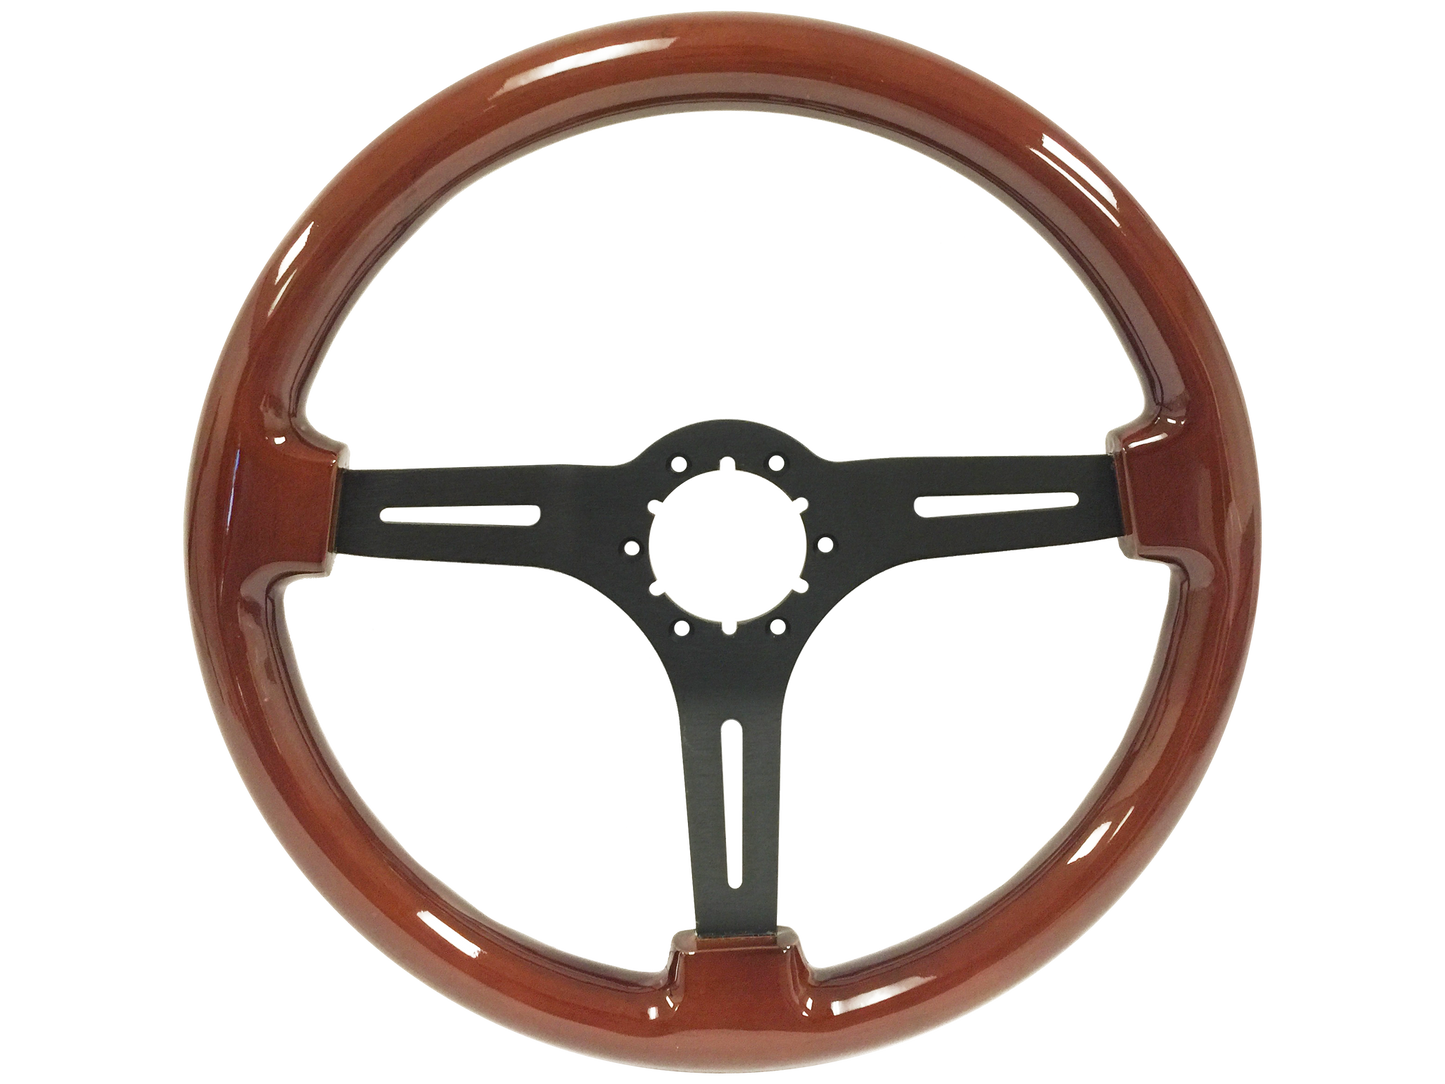 1970-76 Ford Torino Steering Wheel Kit | Walnut Wood | ST3027